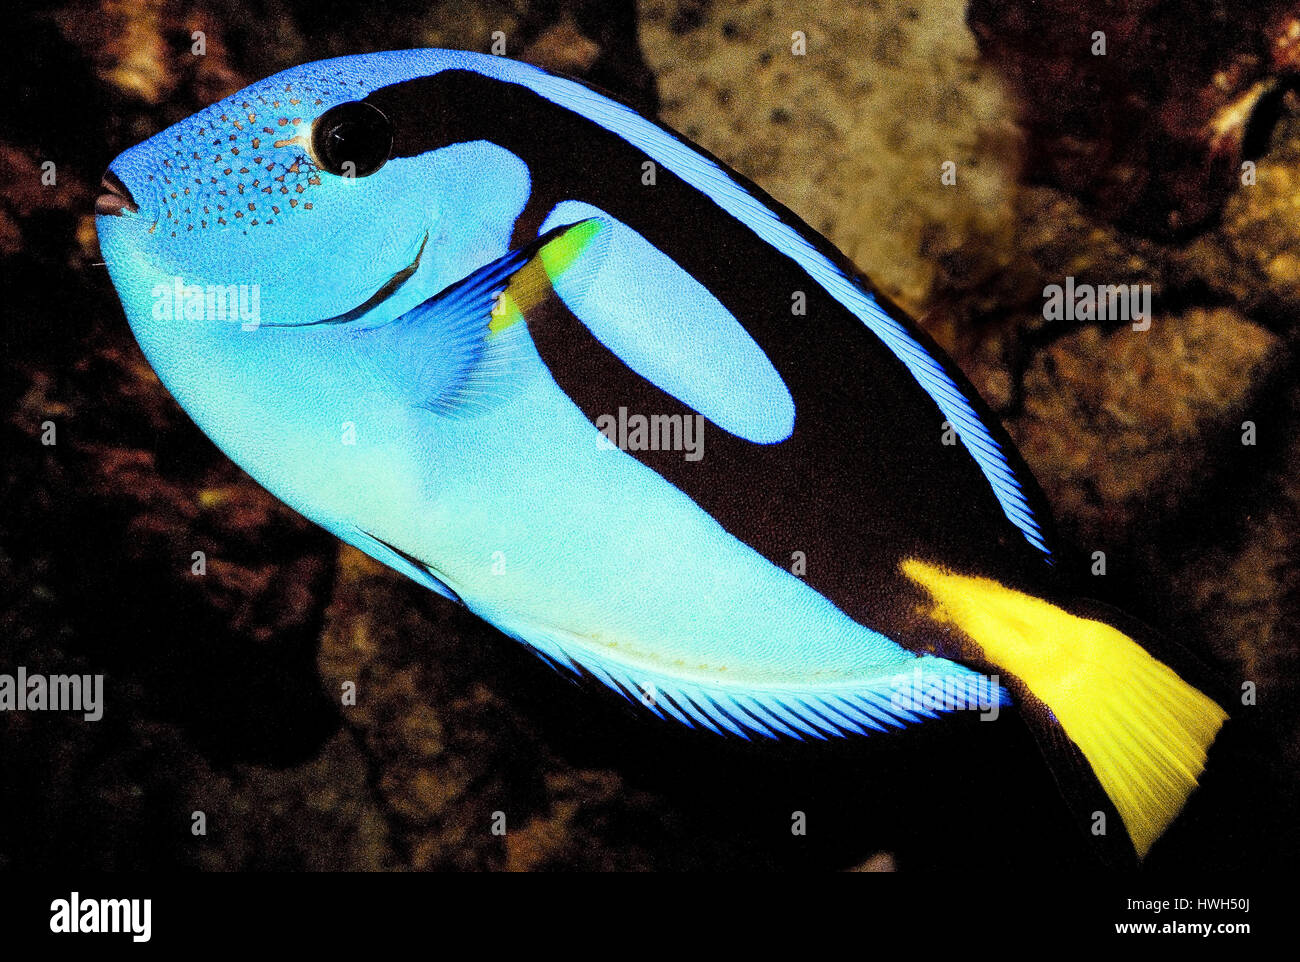 Paracanthurus Hepatus Blue Tang Doctor Fish, Surgeonfish Flag Tail  Surgeonfish Graphic Illustrations Pallet Surgeonfish Stock Illustration -  Illustration of reptile, yellow: 288417927